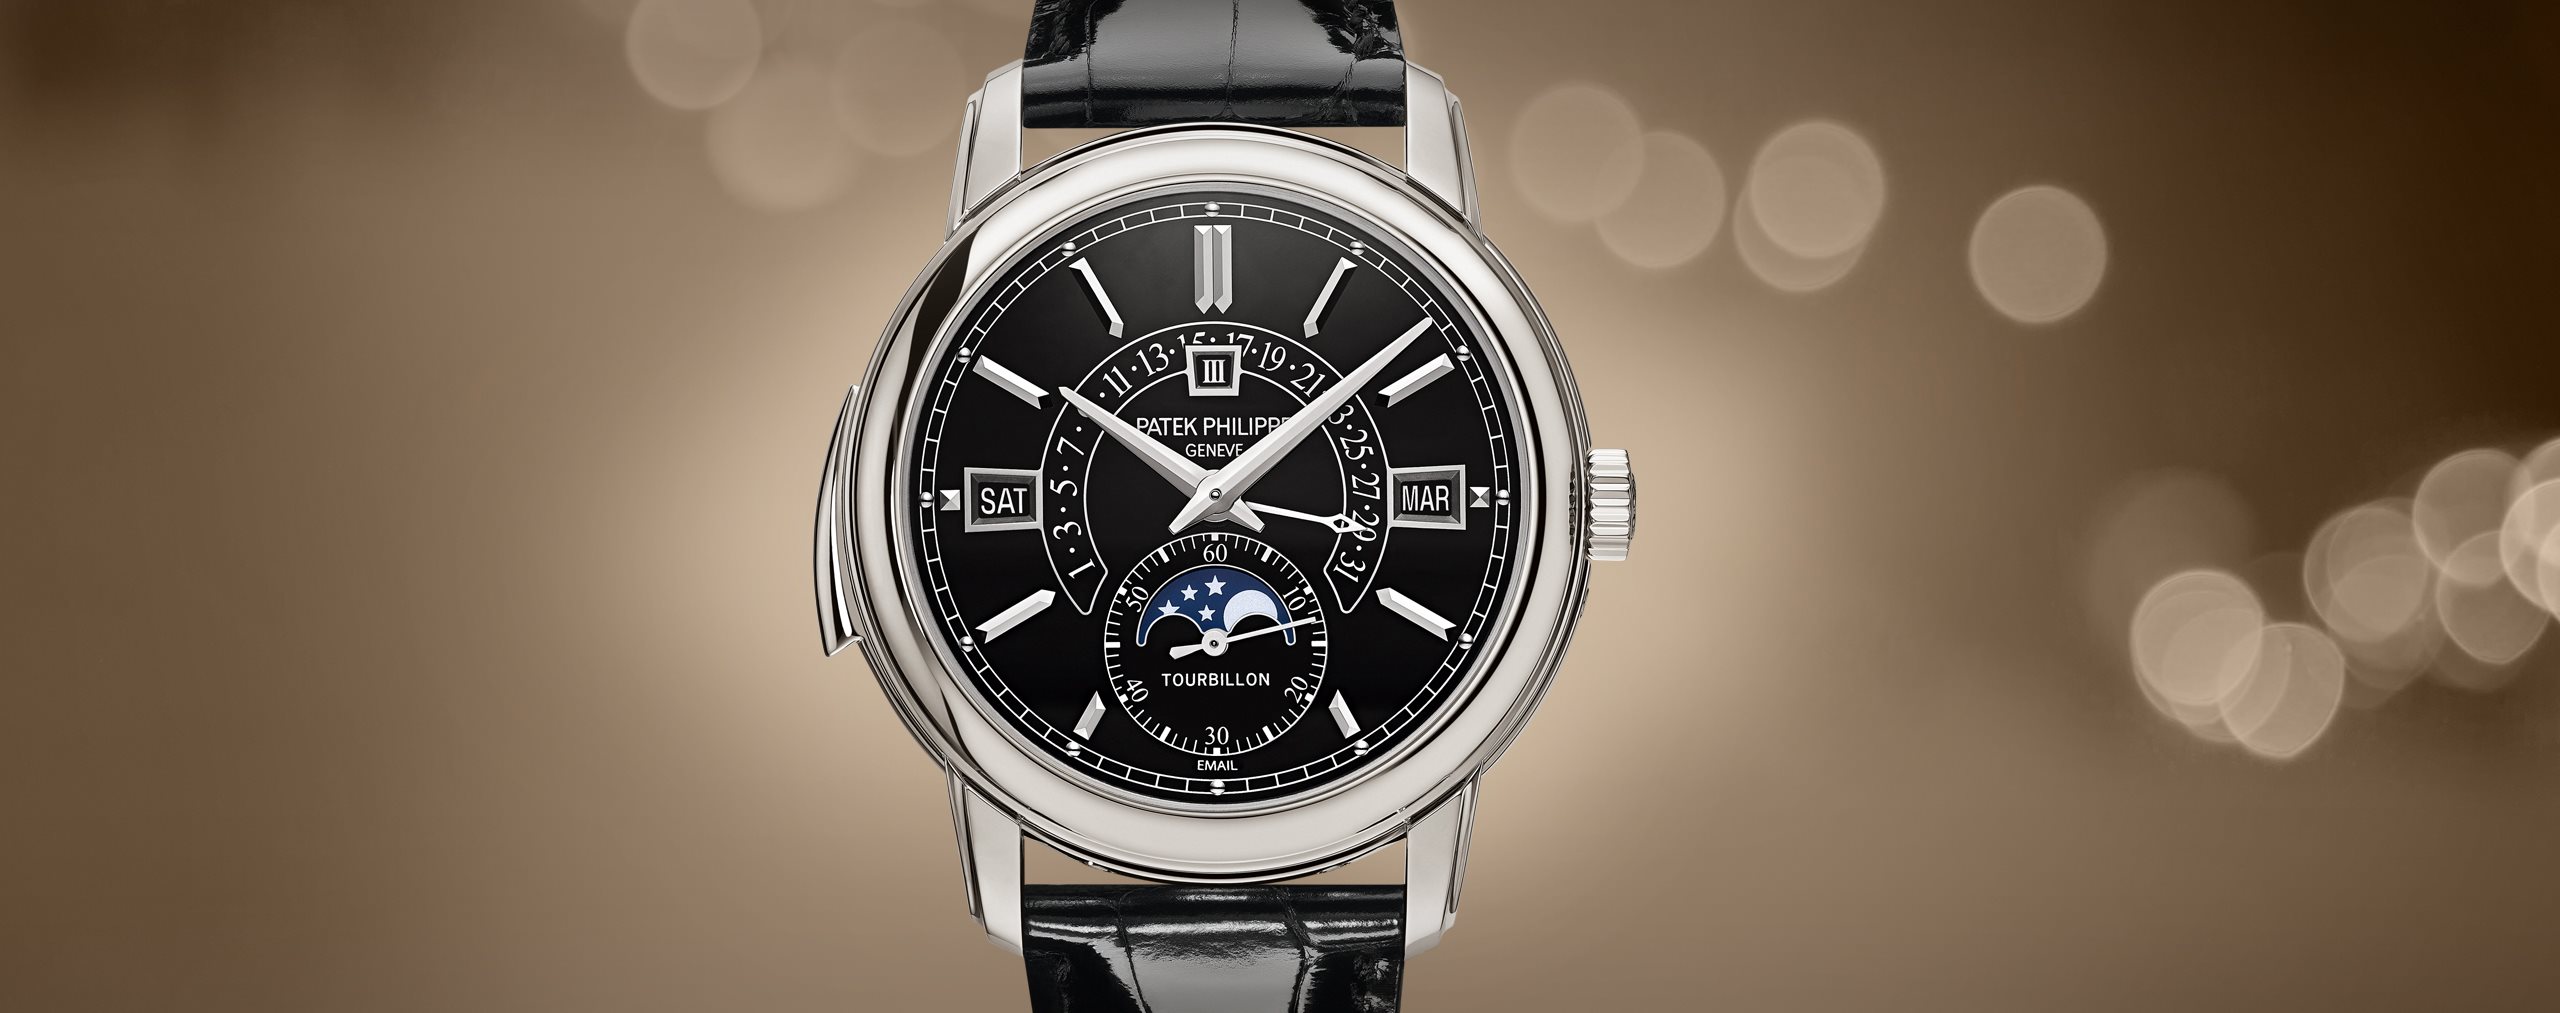 luxury watches replica ebay